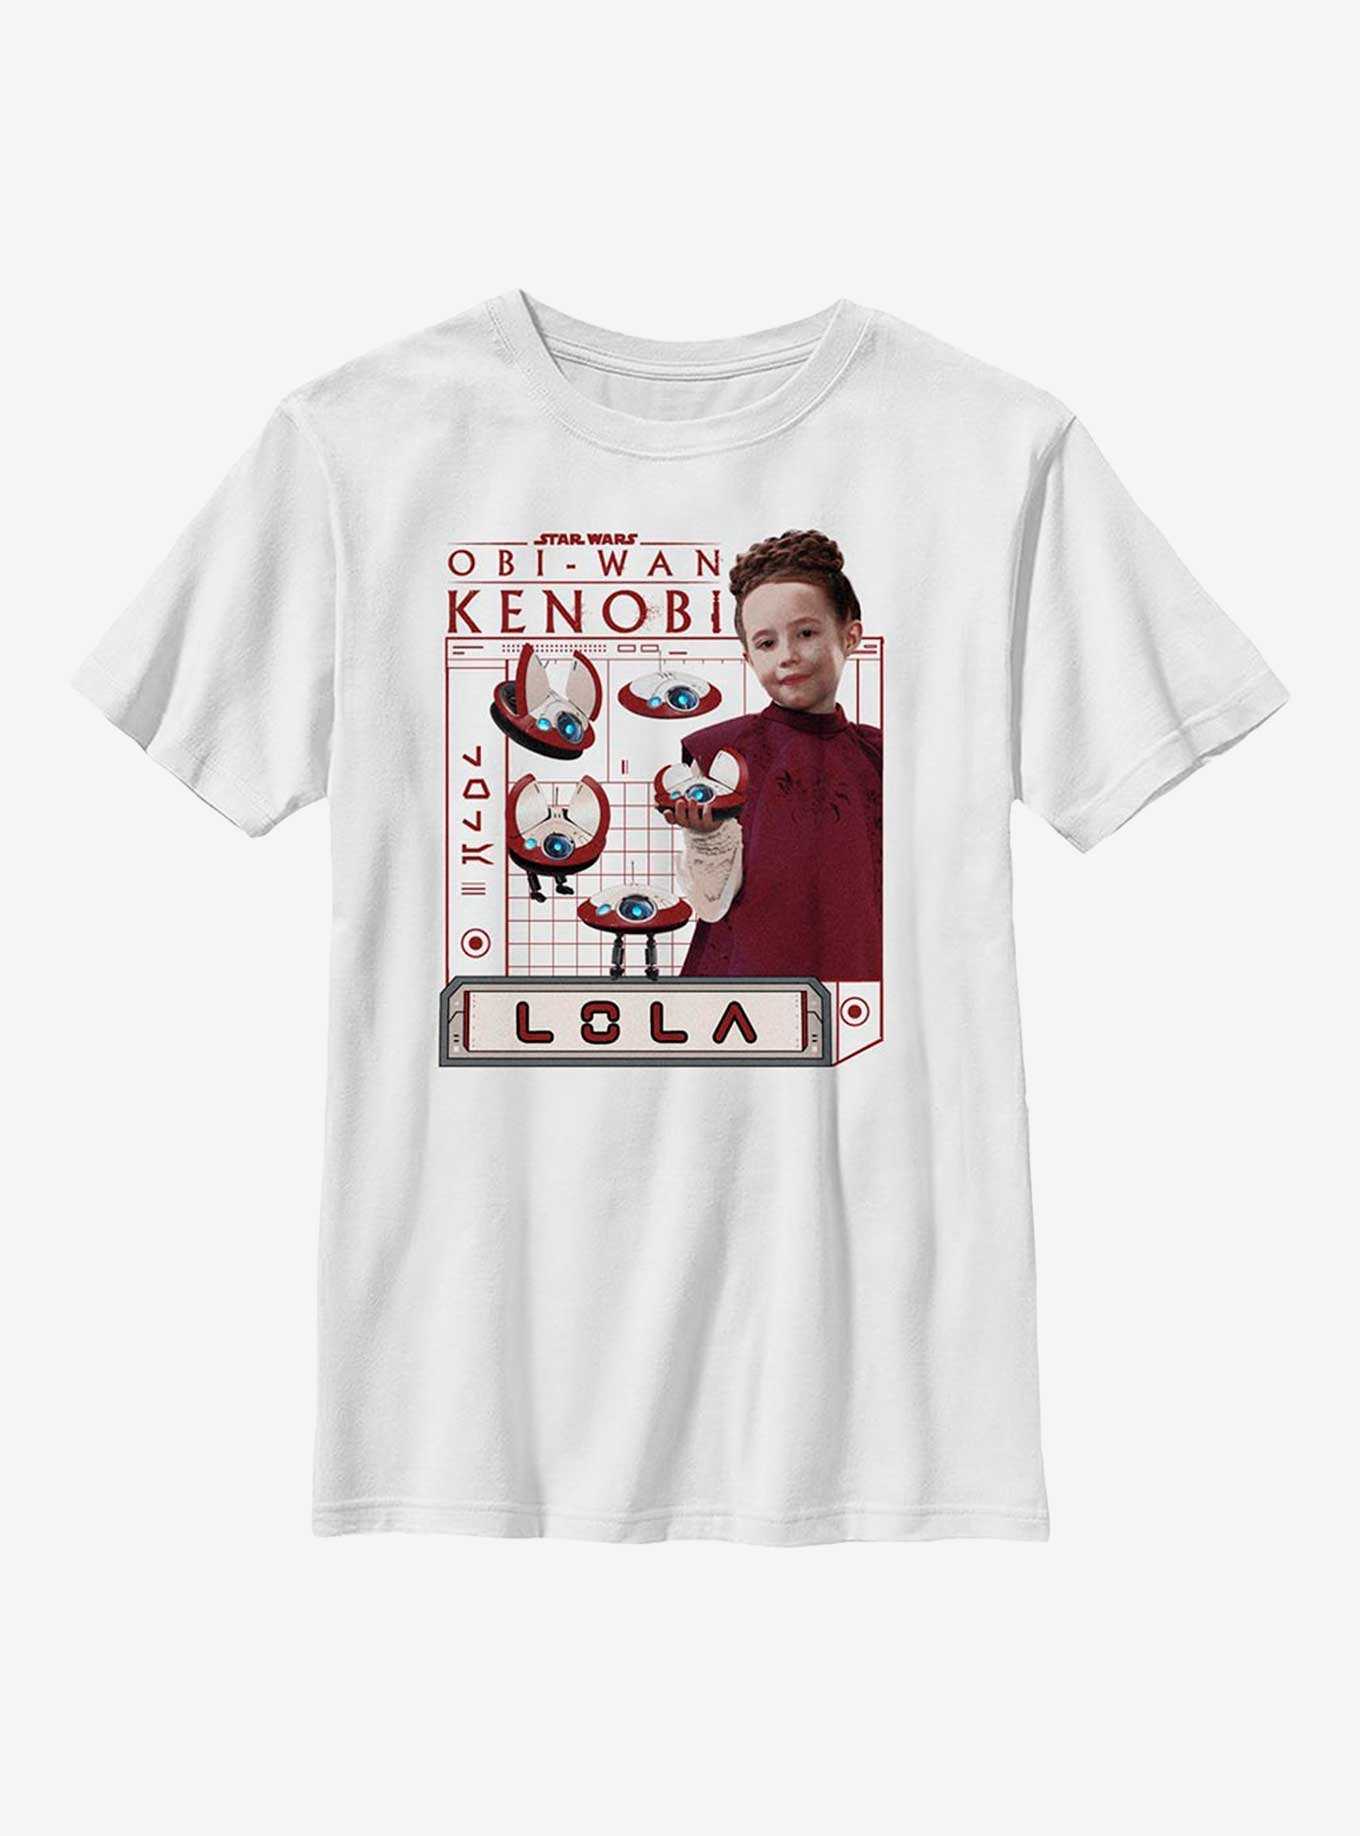 Star Wars Obi-Wan Kenobi Leia & Lola Youth T-Shirt, , hi-res